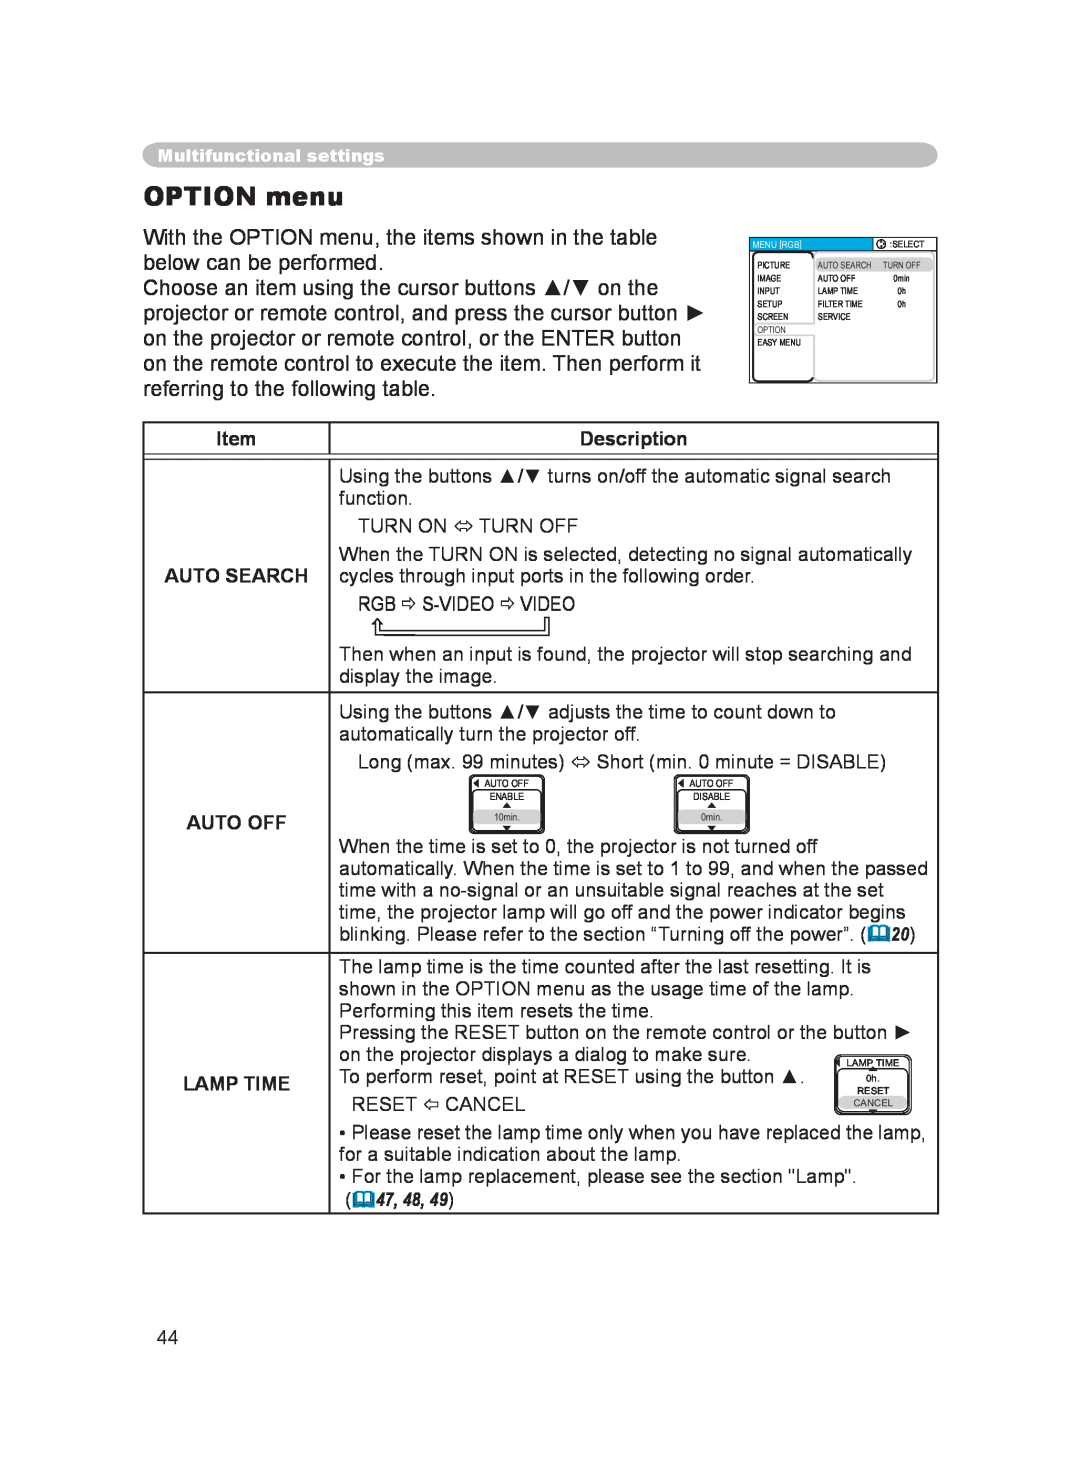 Hitachi PJ-LC9 user manual OPTION menu, Description, Auto Off, Lamp Time 